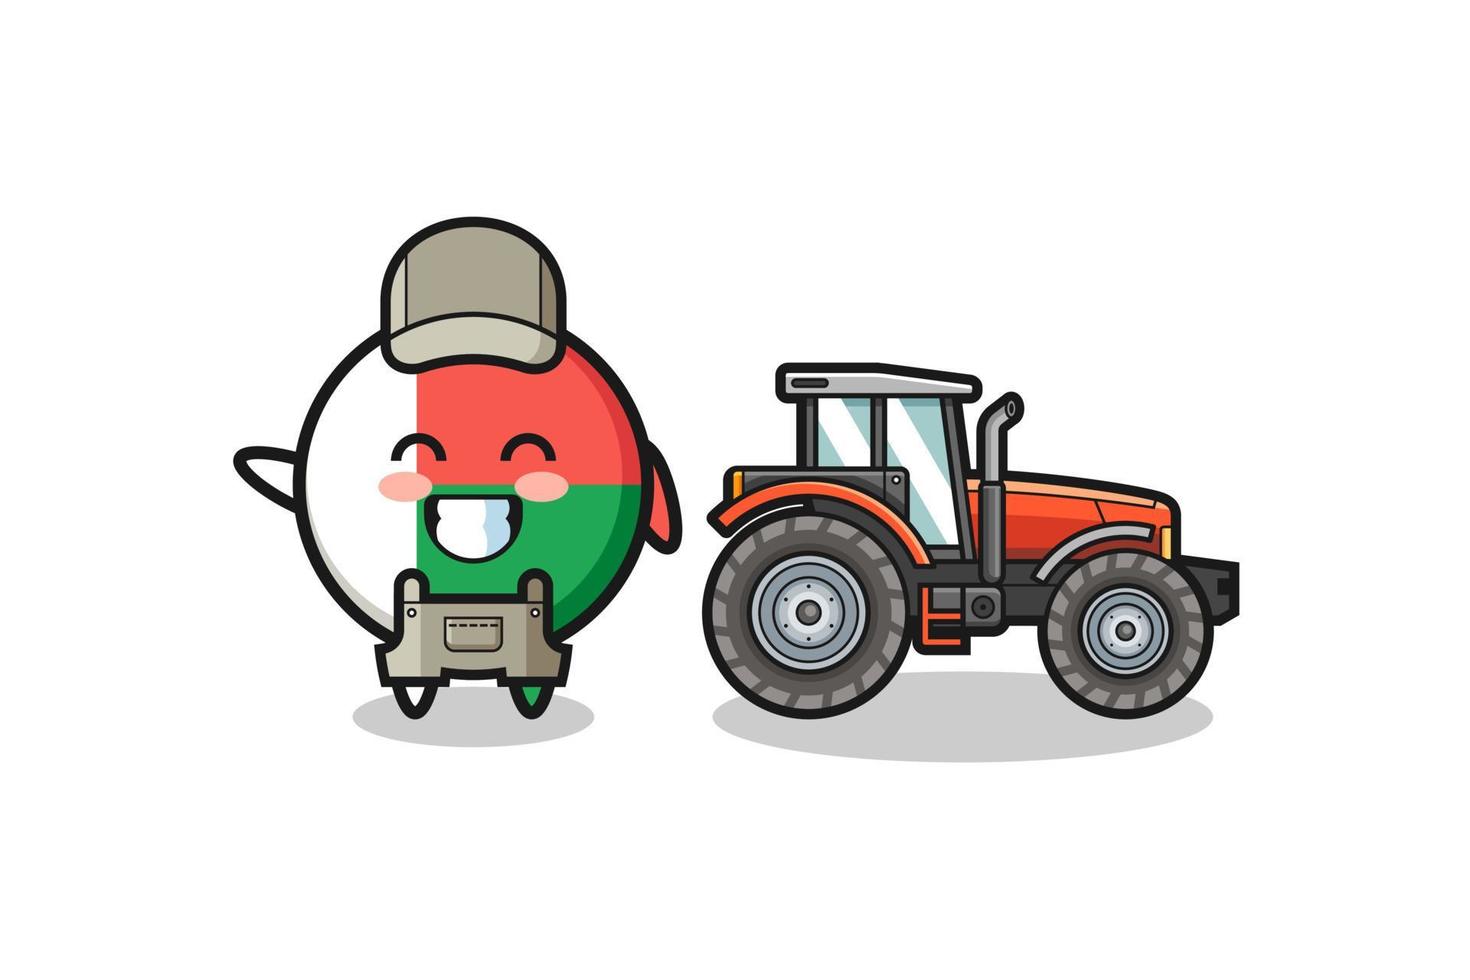 the madagascar flag farmer mascot standing beside a tractor vector